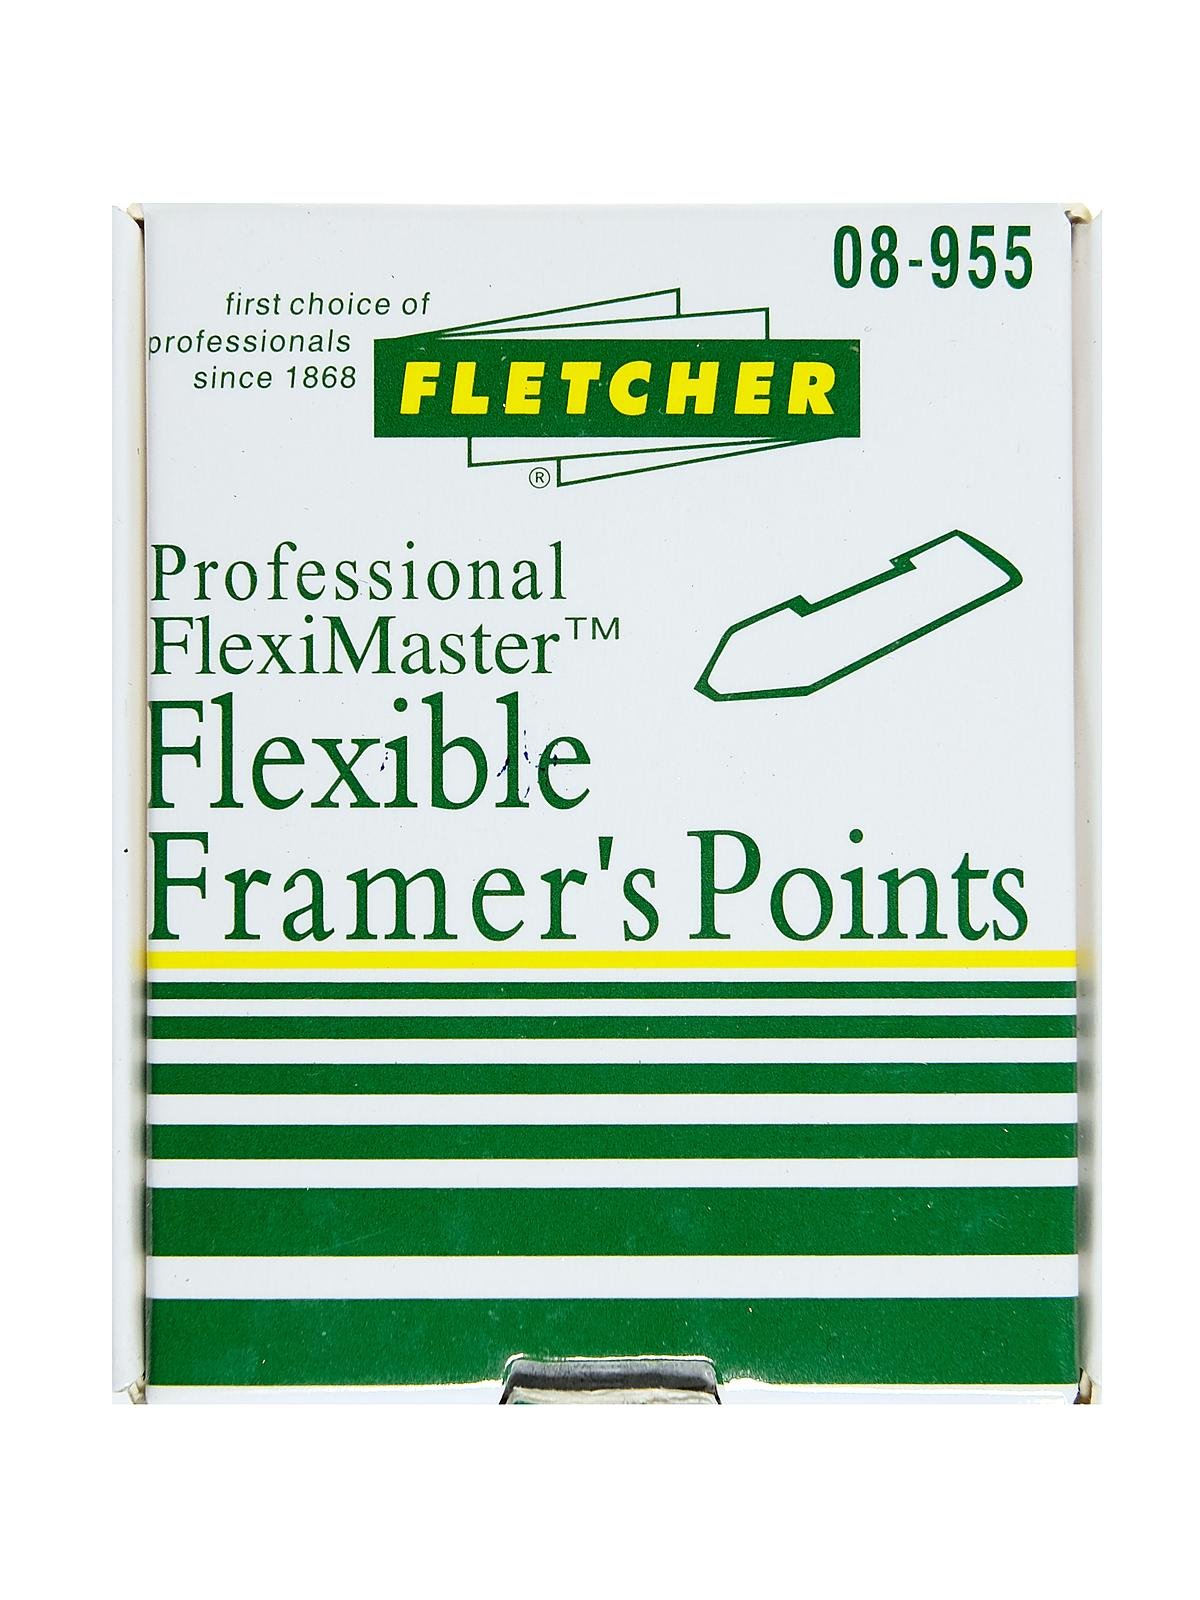 Fletcher-Terry - Flexible Framer's Points